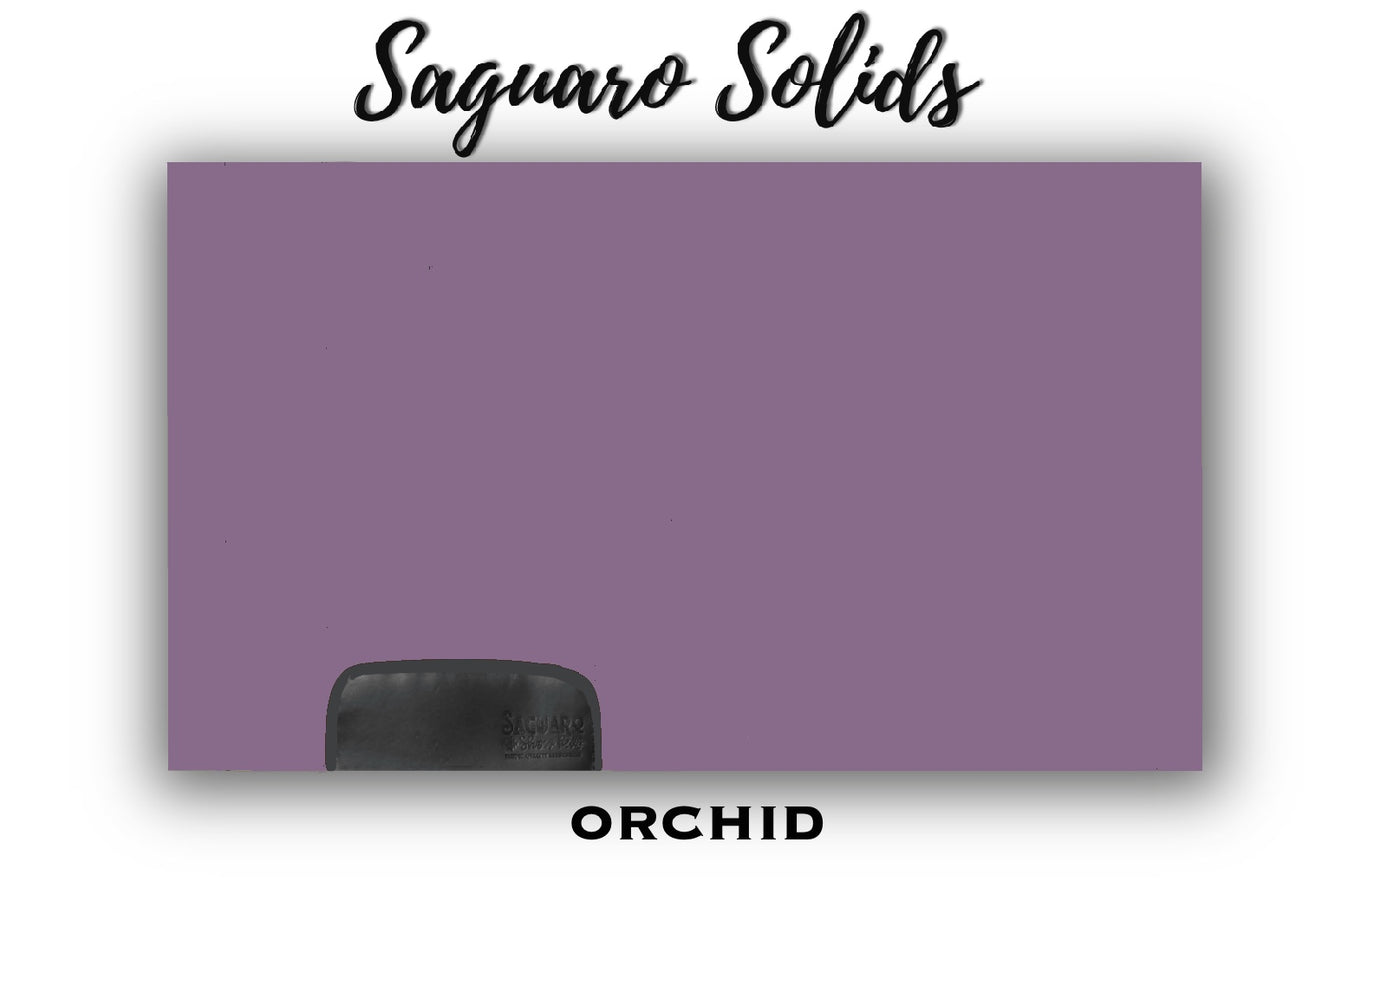 Saguaro Solid "Orchid" Show Pad (SEMI-CUSTOM)